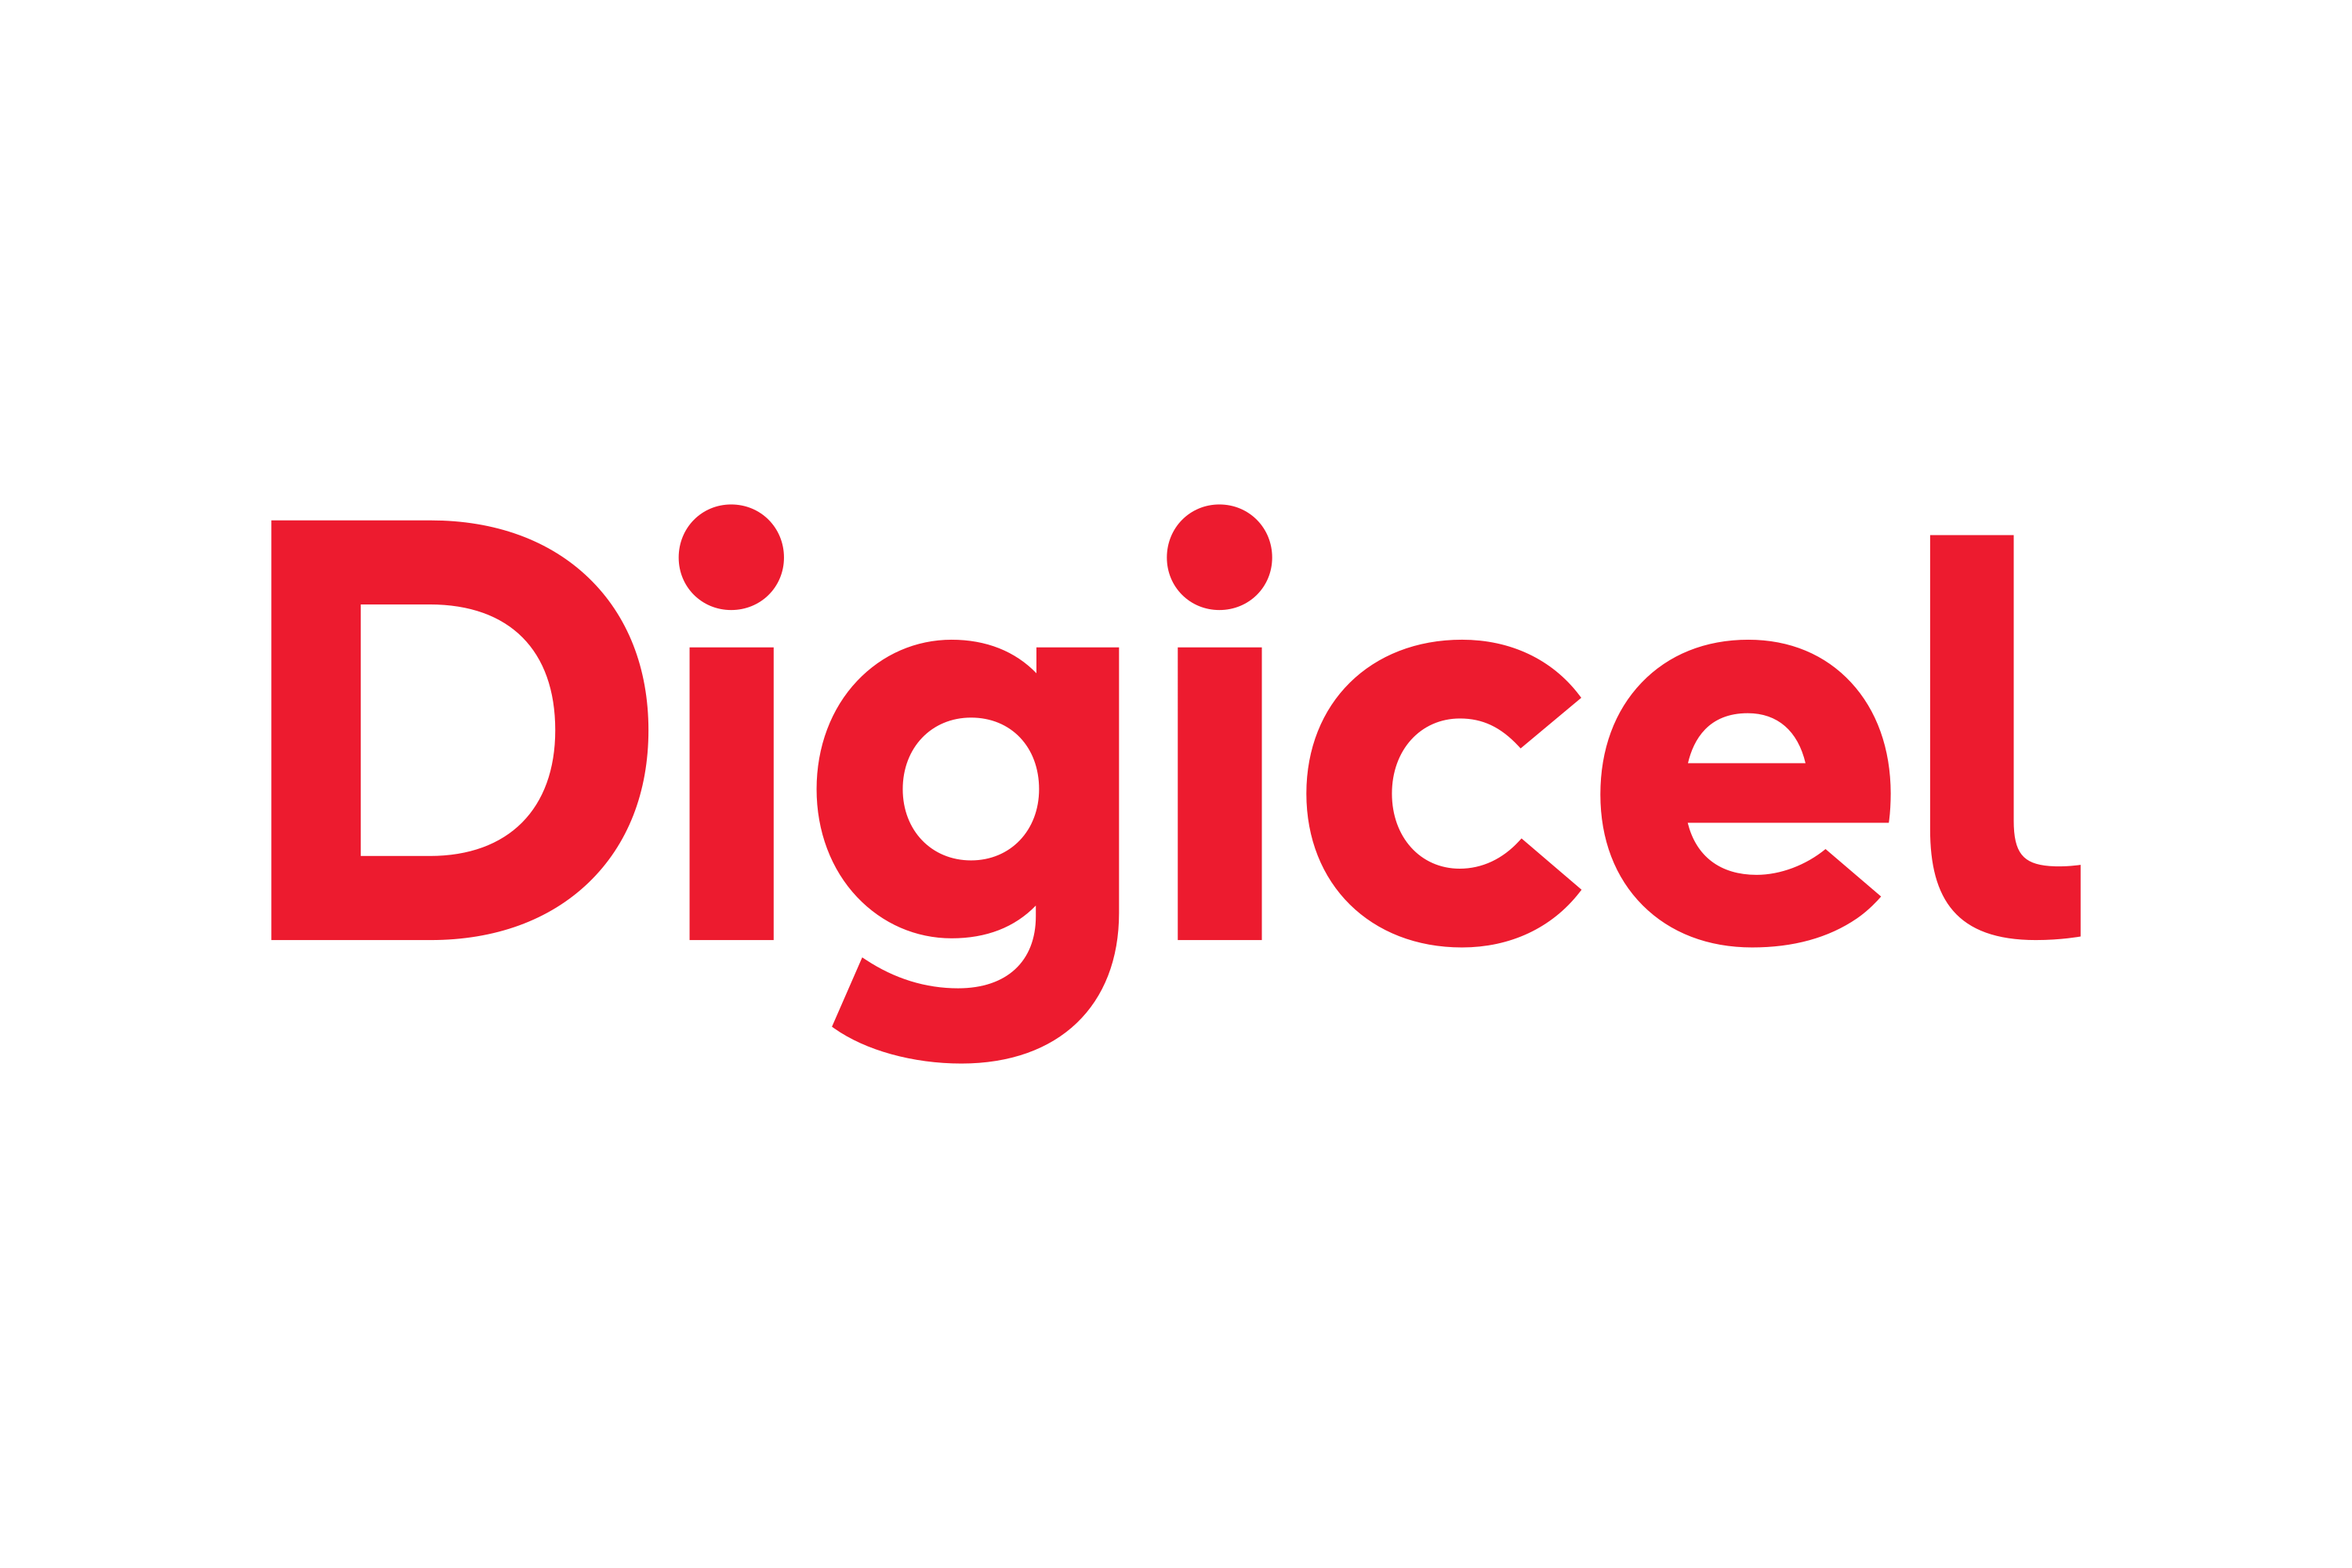 Digicel El Salvador Logo - Free download logo in SVG or PNG format